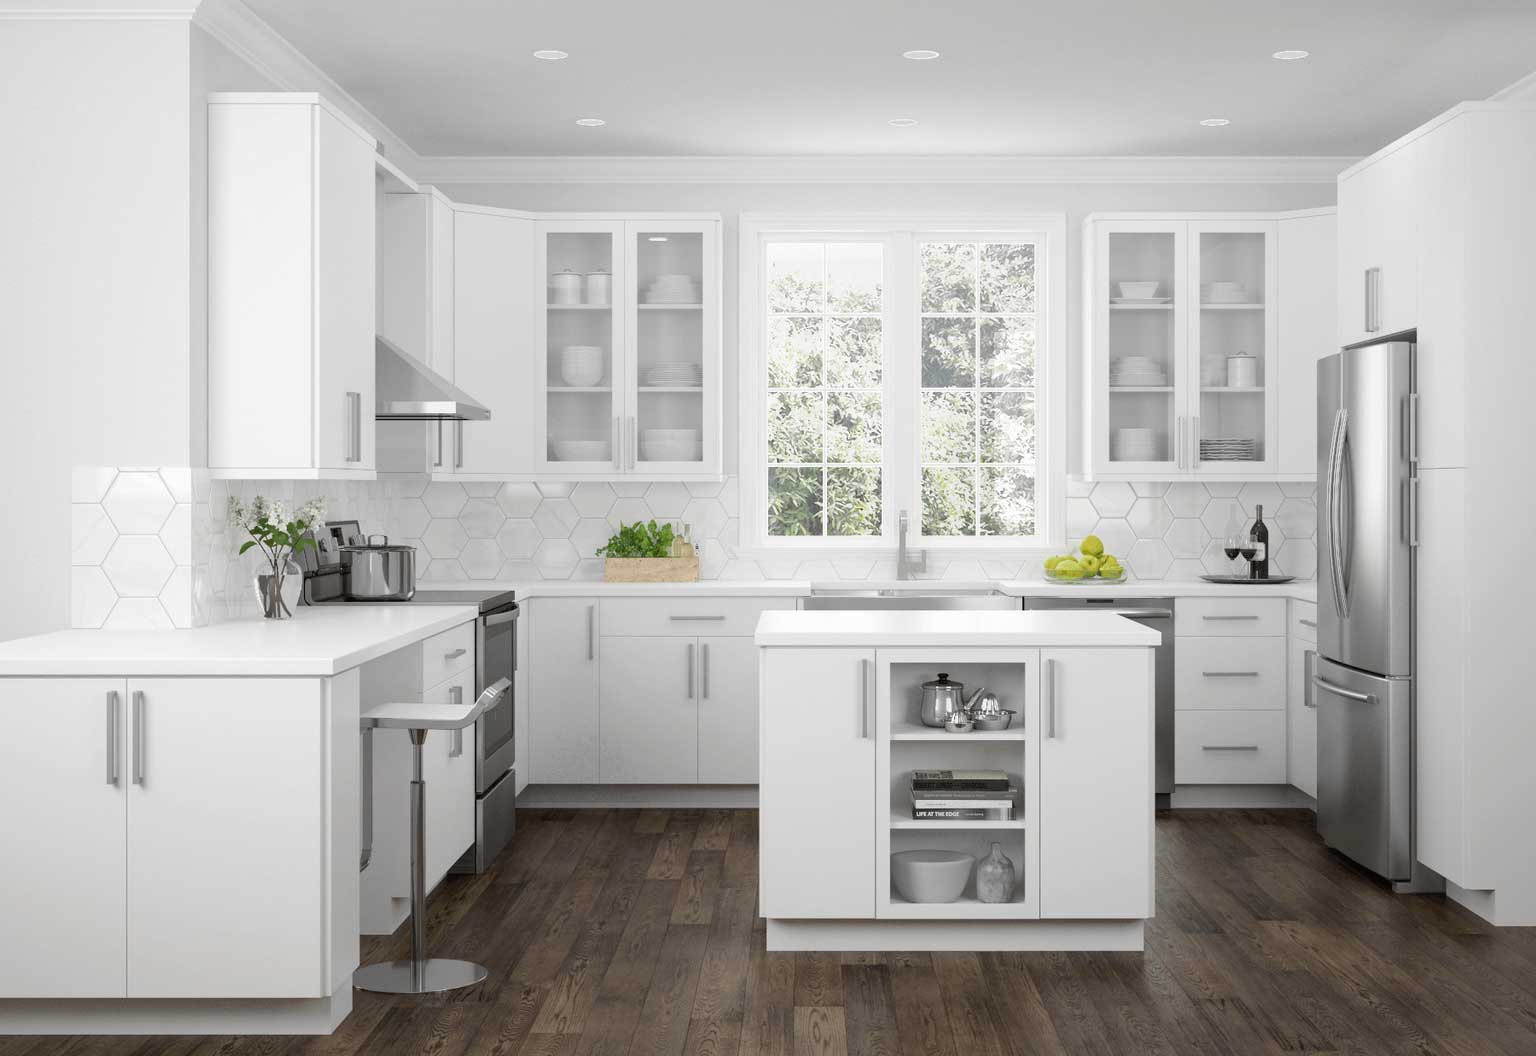 hampton bay kitchen cabinet design